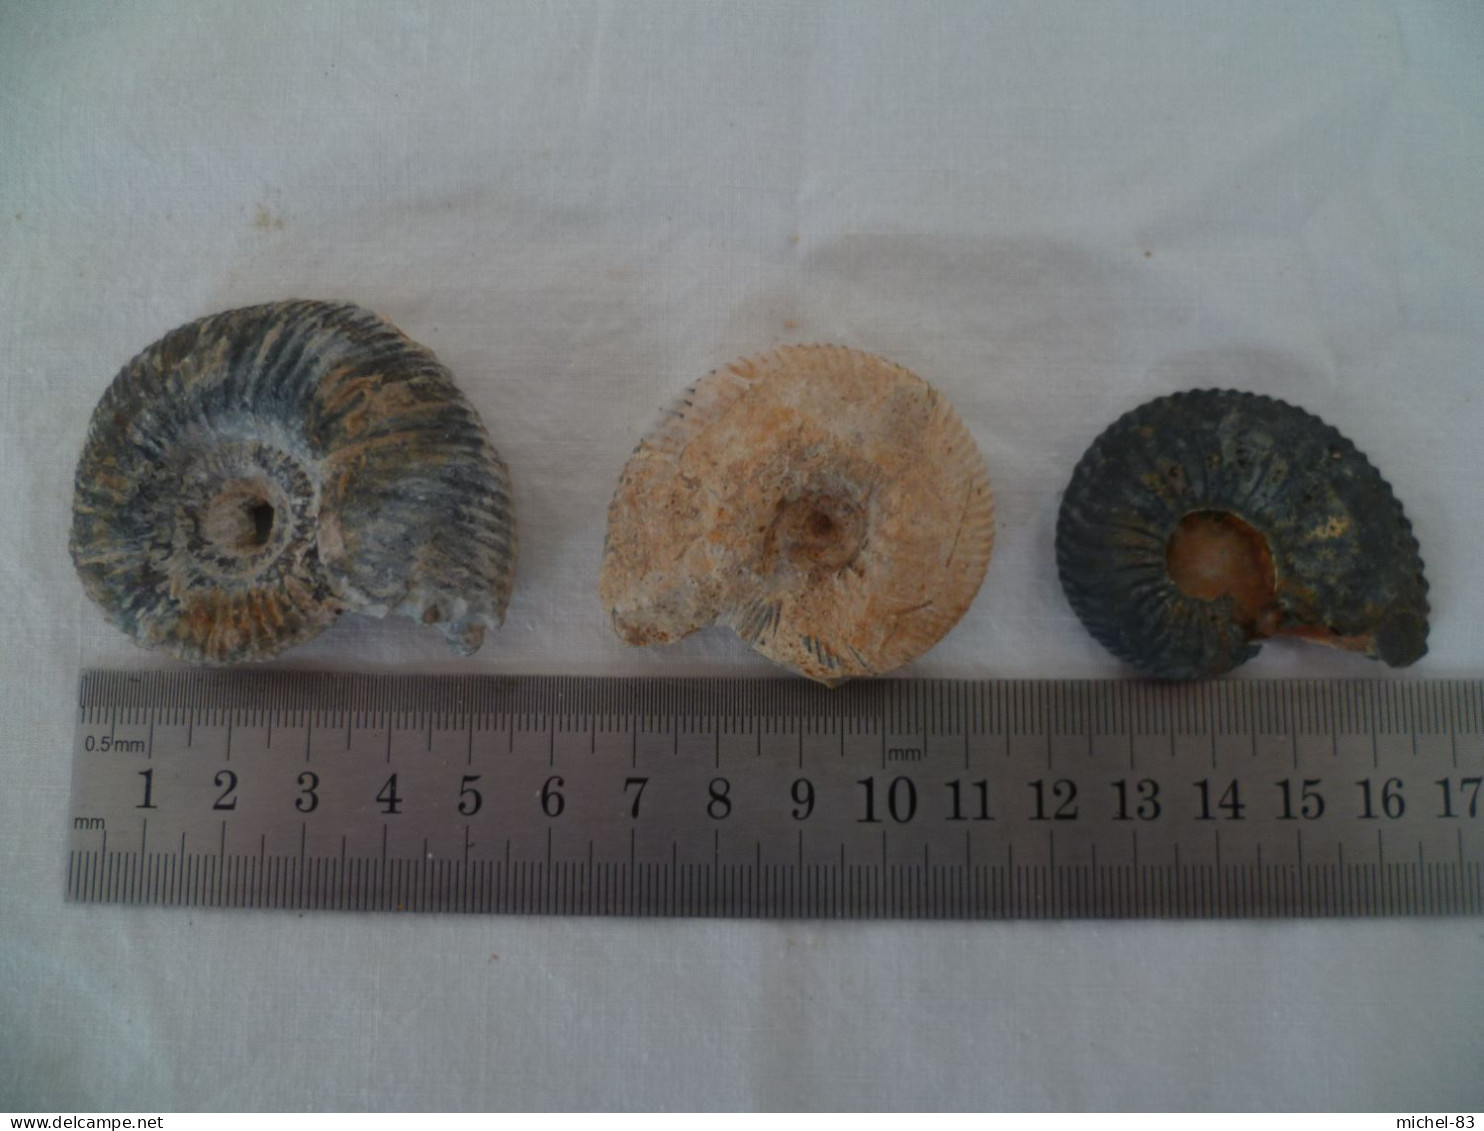 Ammonite - Fossils